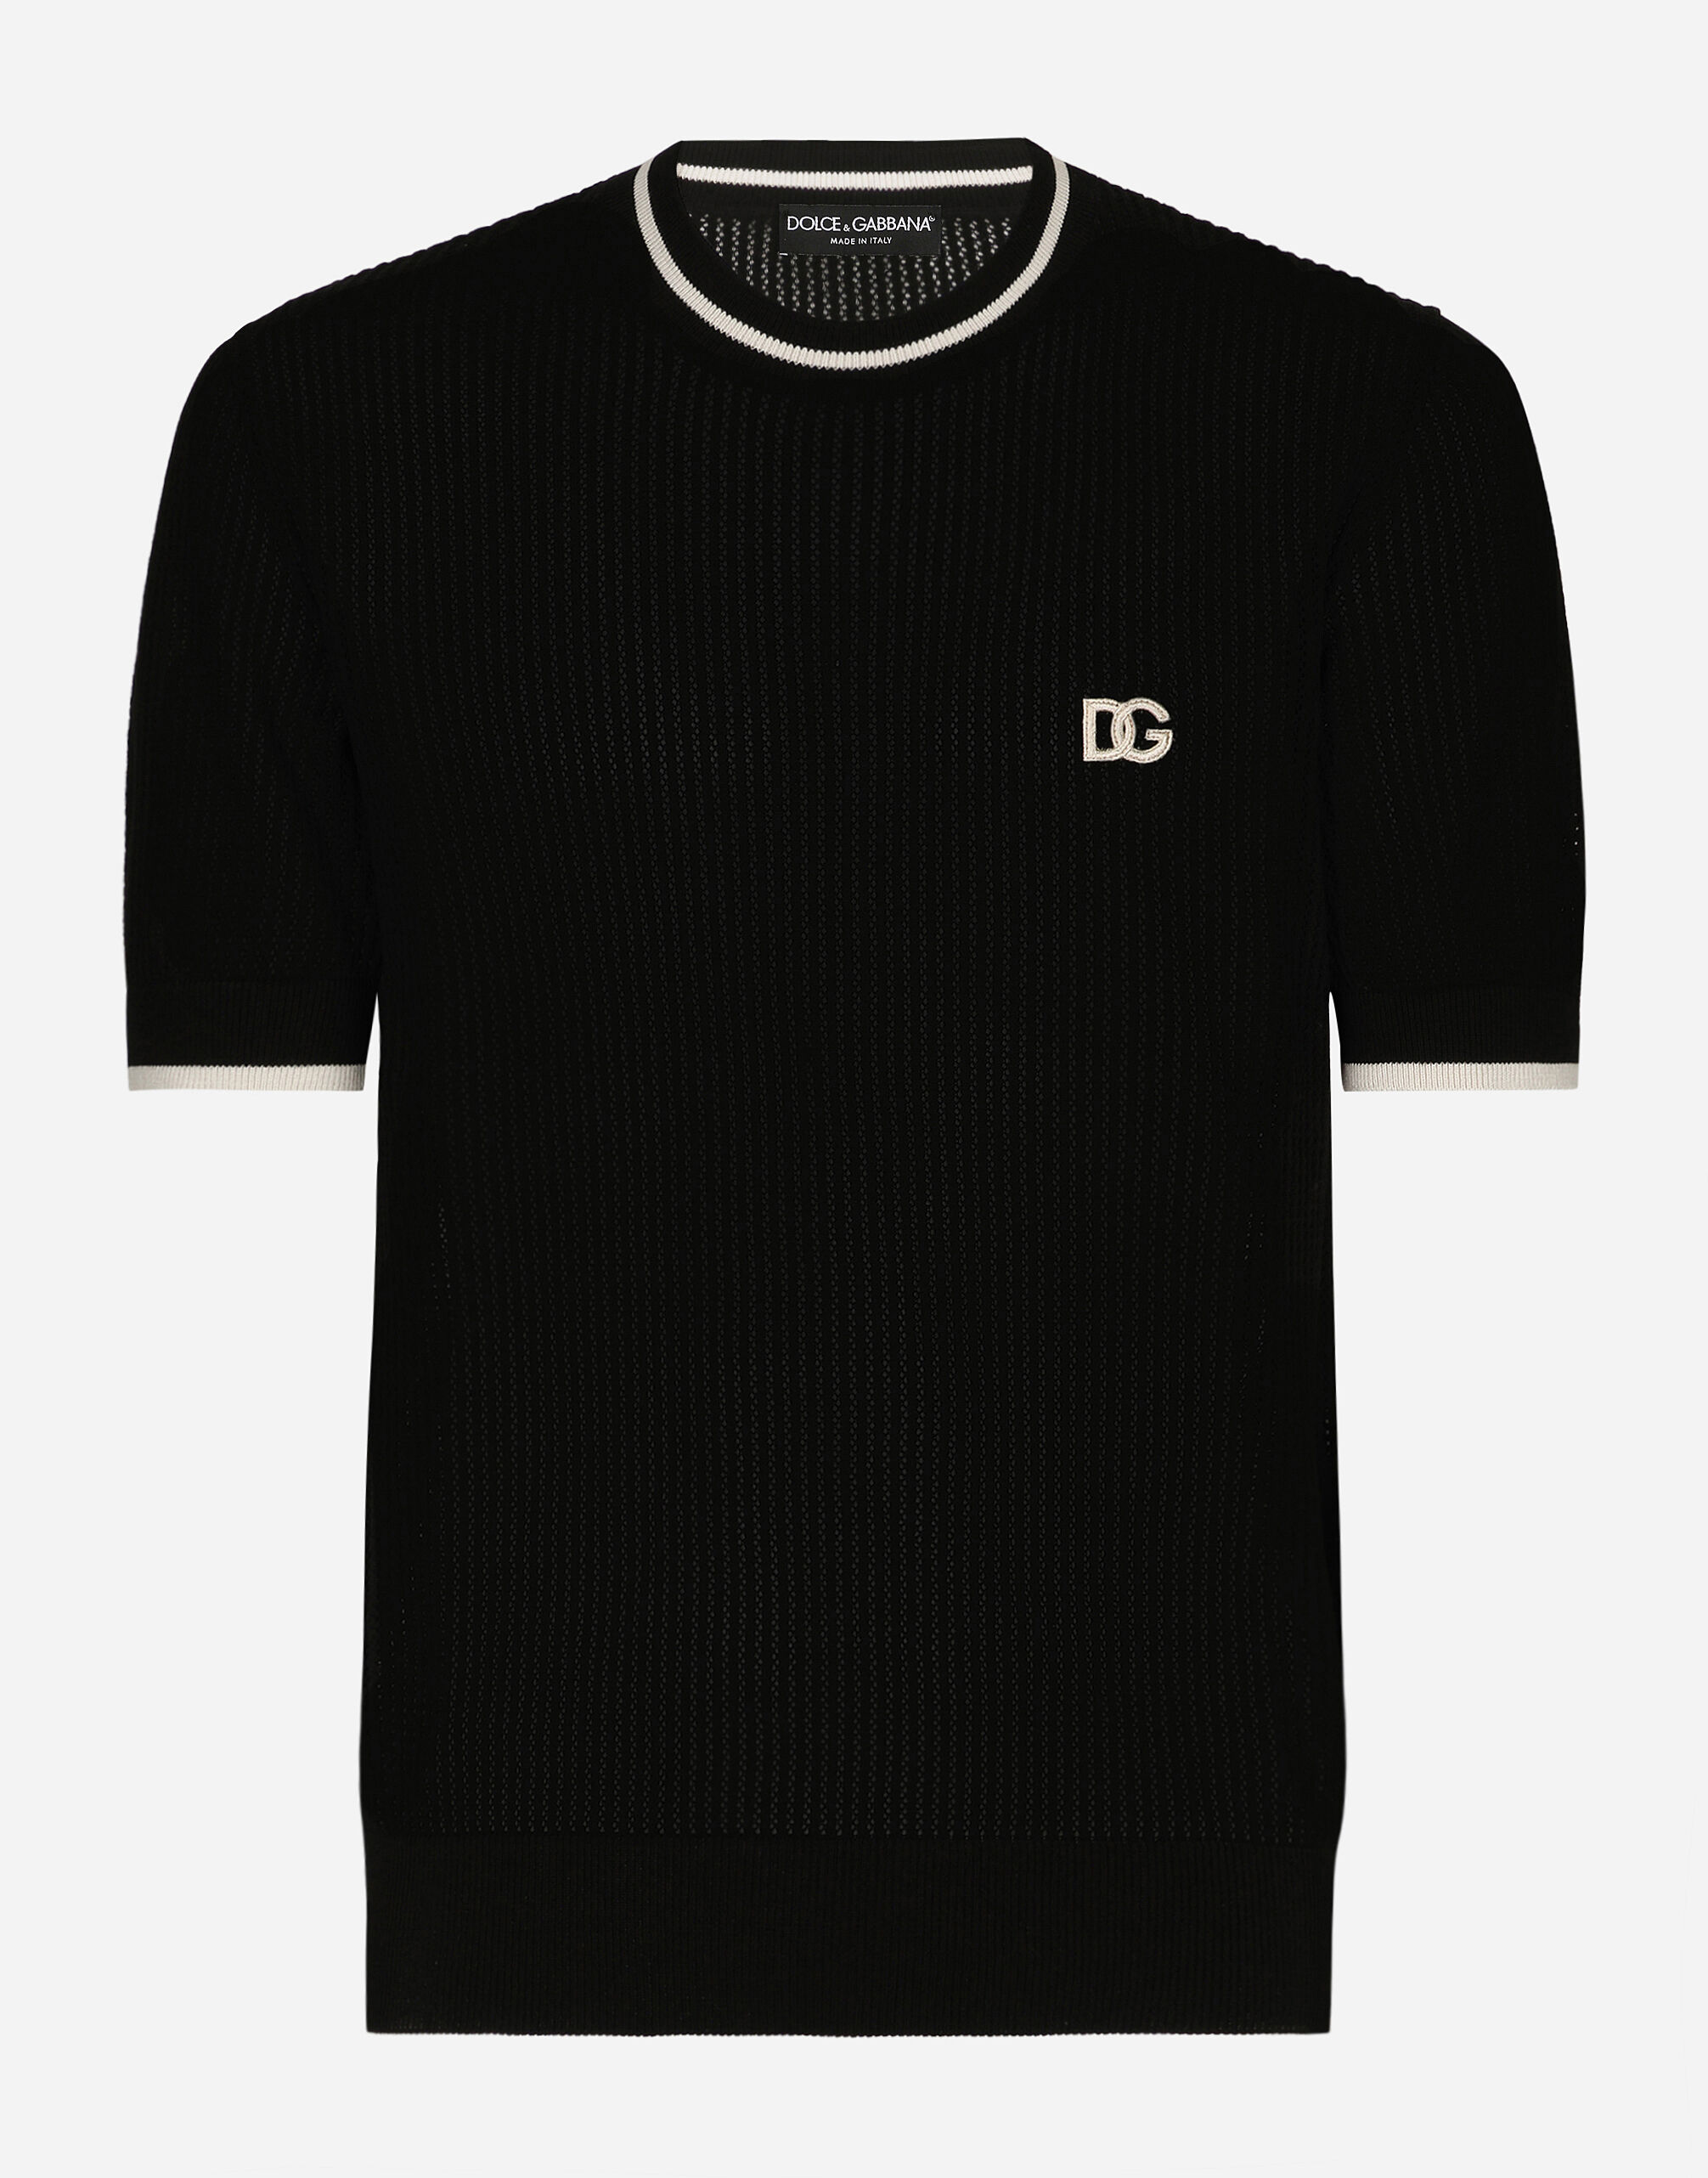 Dolce & Gabbana Round-neck cotton sweater with DG logo Black GXZ38ZJBCDS